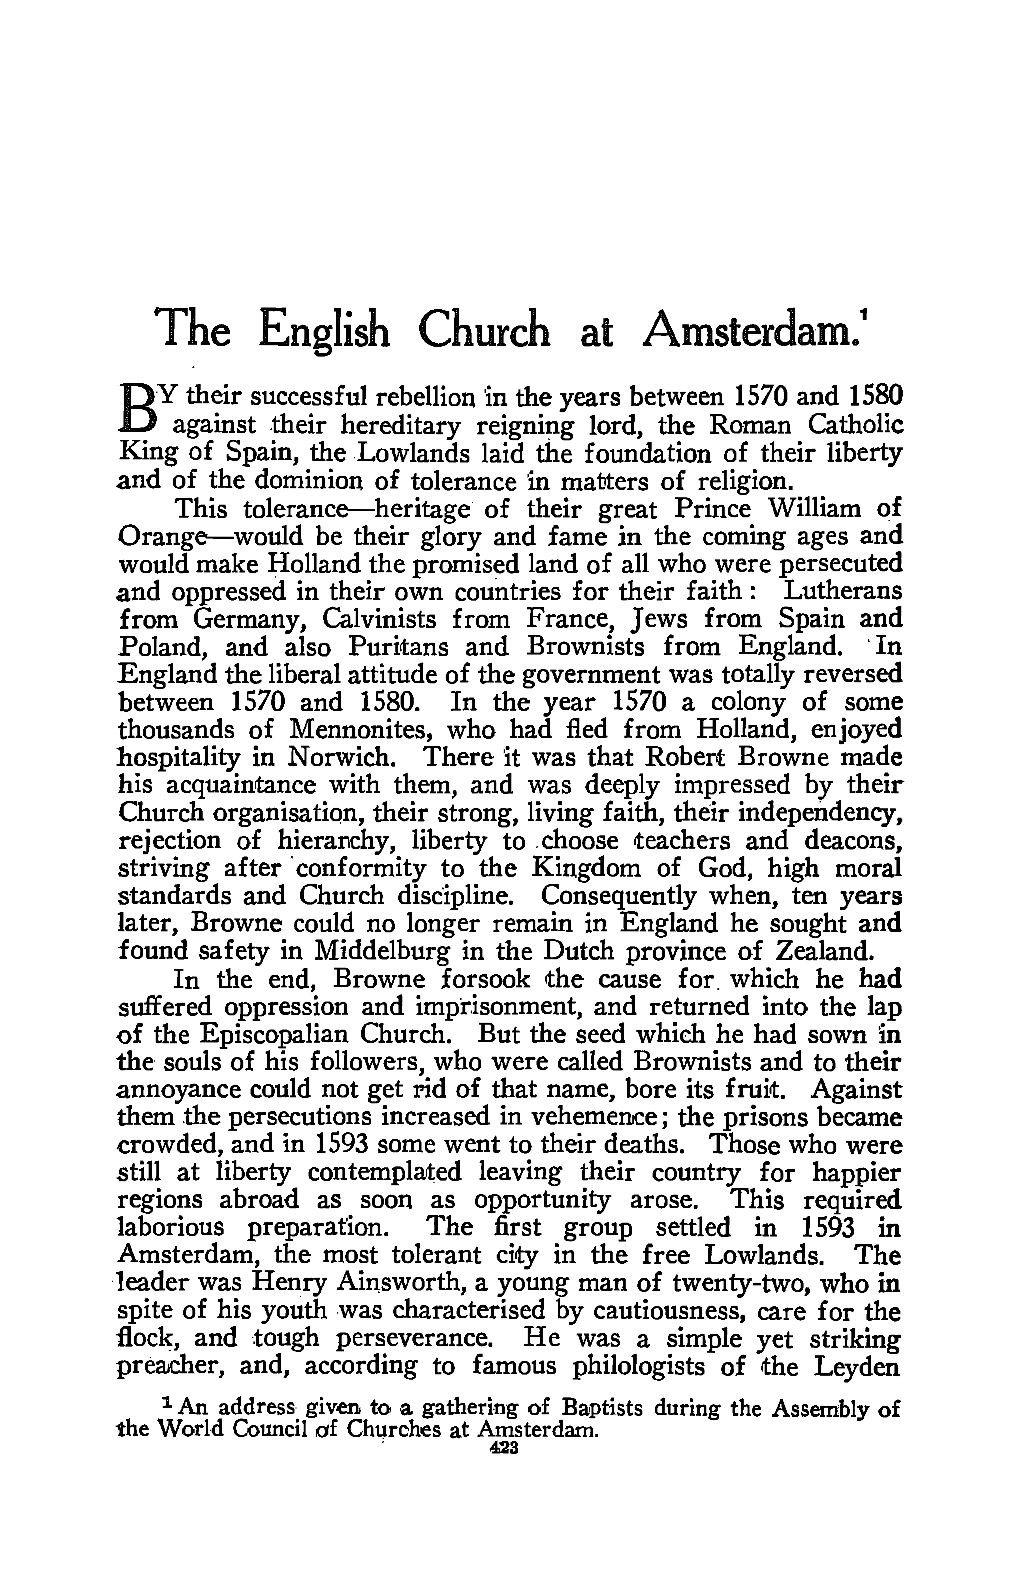 The English Church at Amsterdam.'